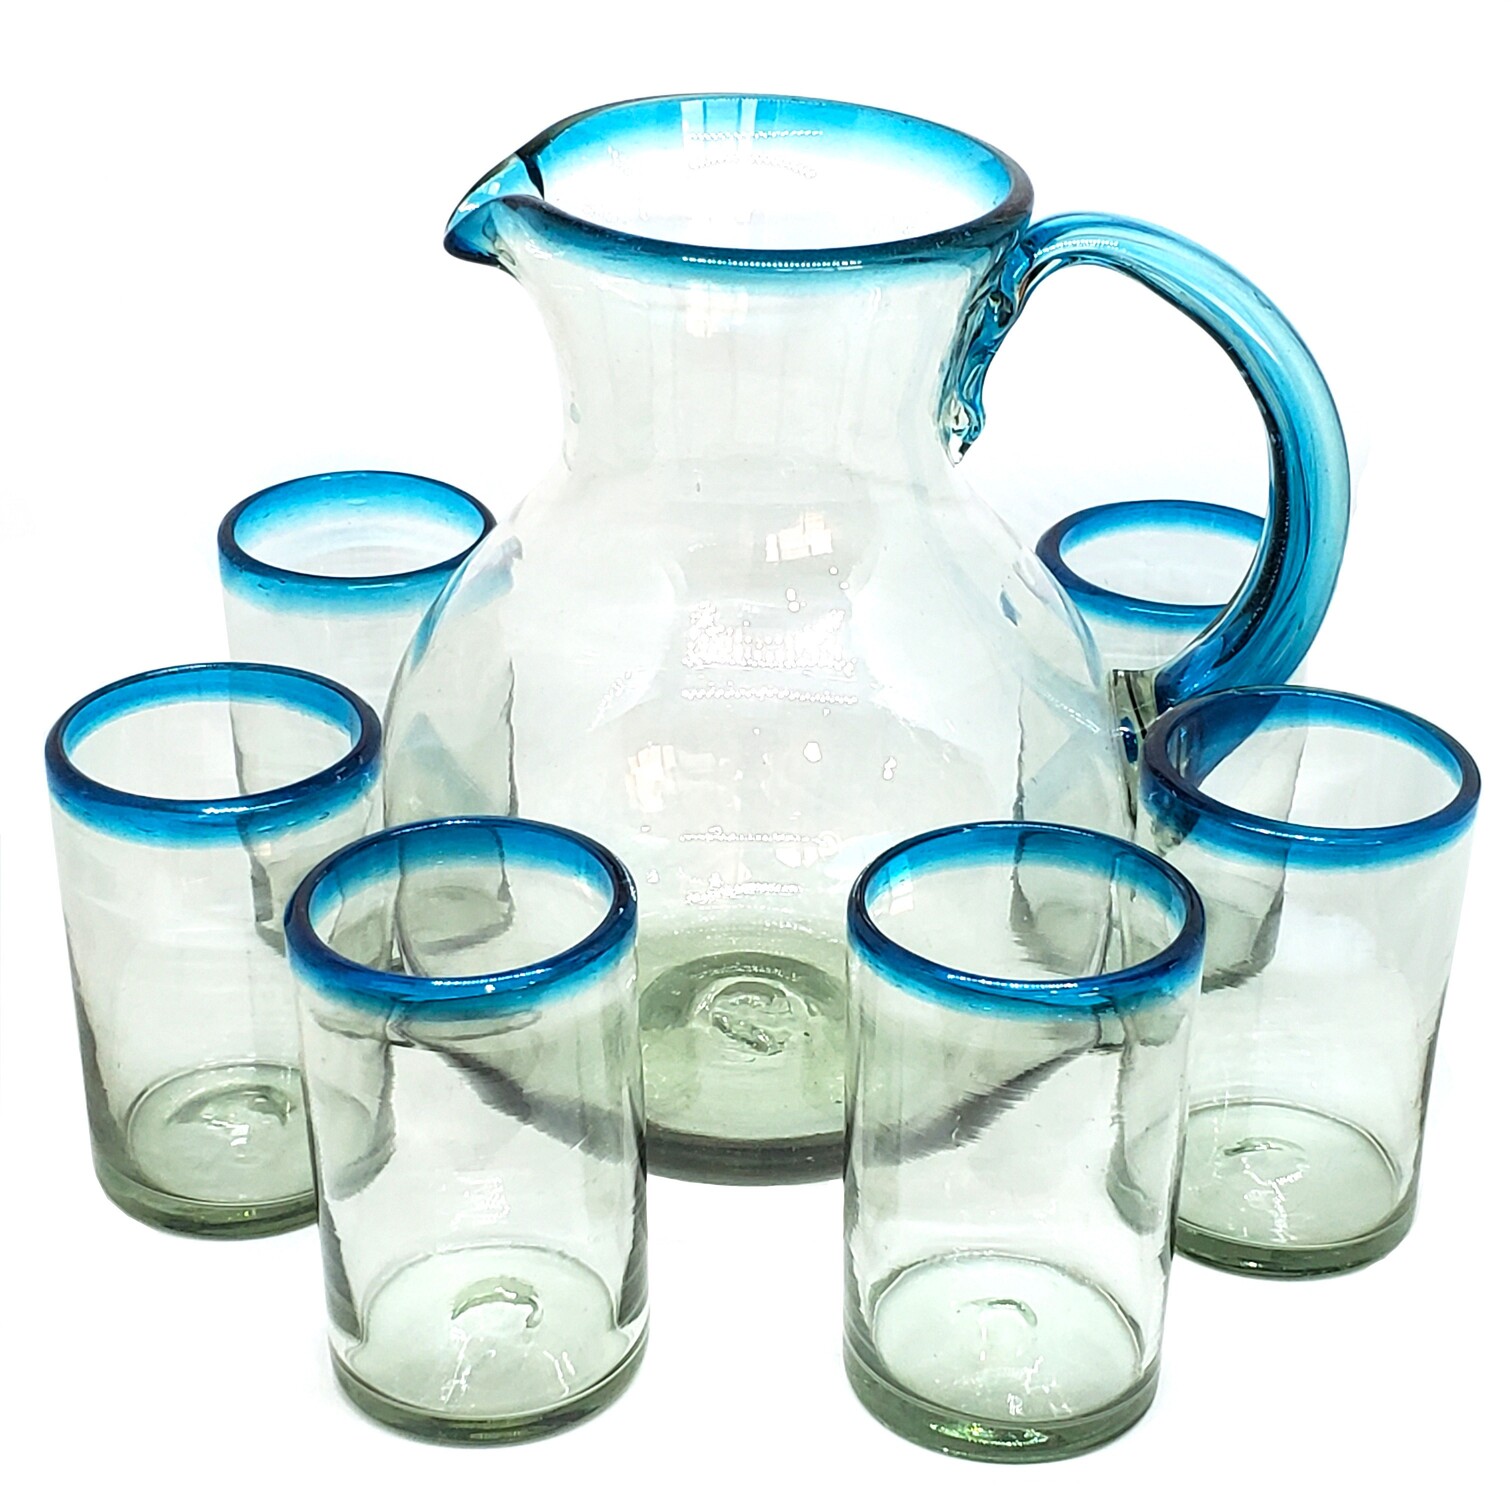 MEXICAN GLASSWARE / Aqua Blue Rim 120 oz Pitcher and 6 Drinking Glasses set